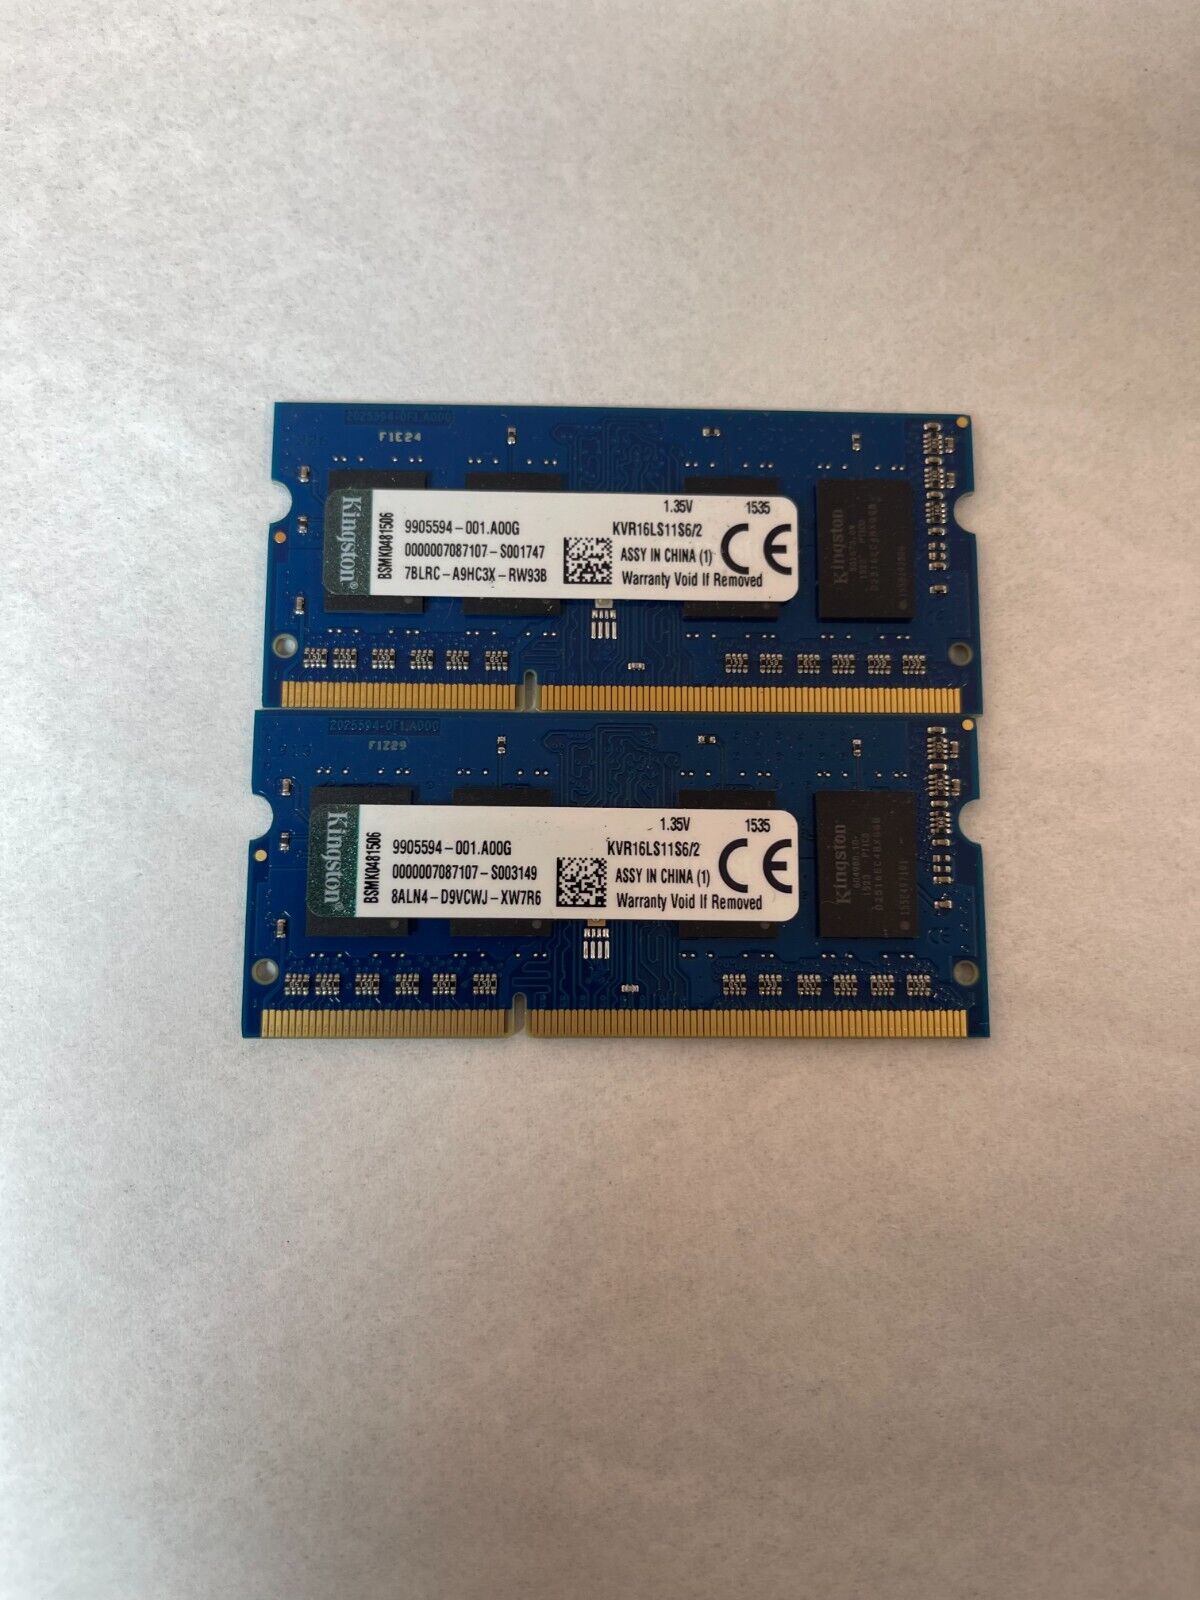 2x Kingston kvr16ls11s6/2 RAM modules